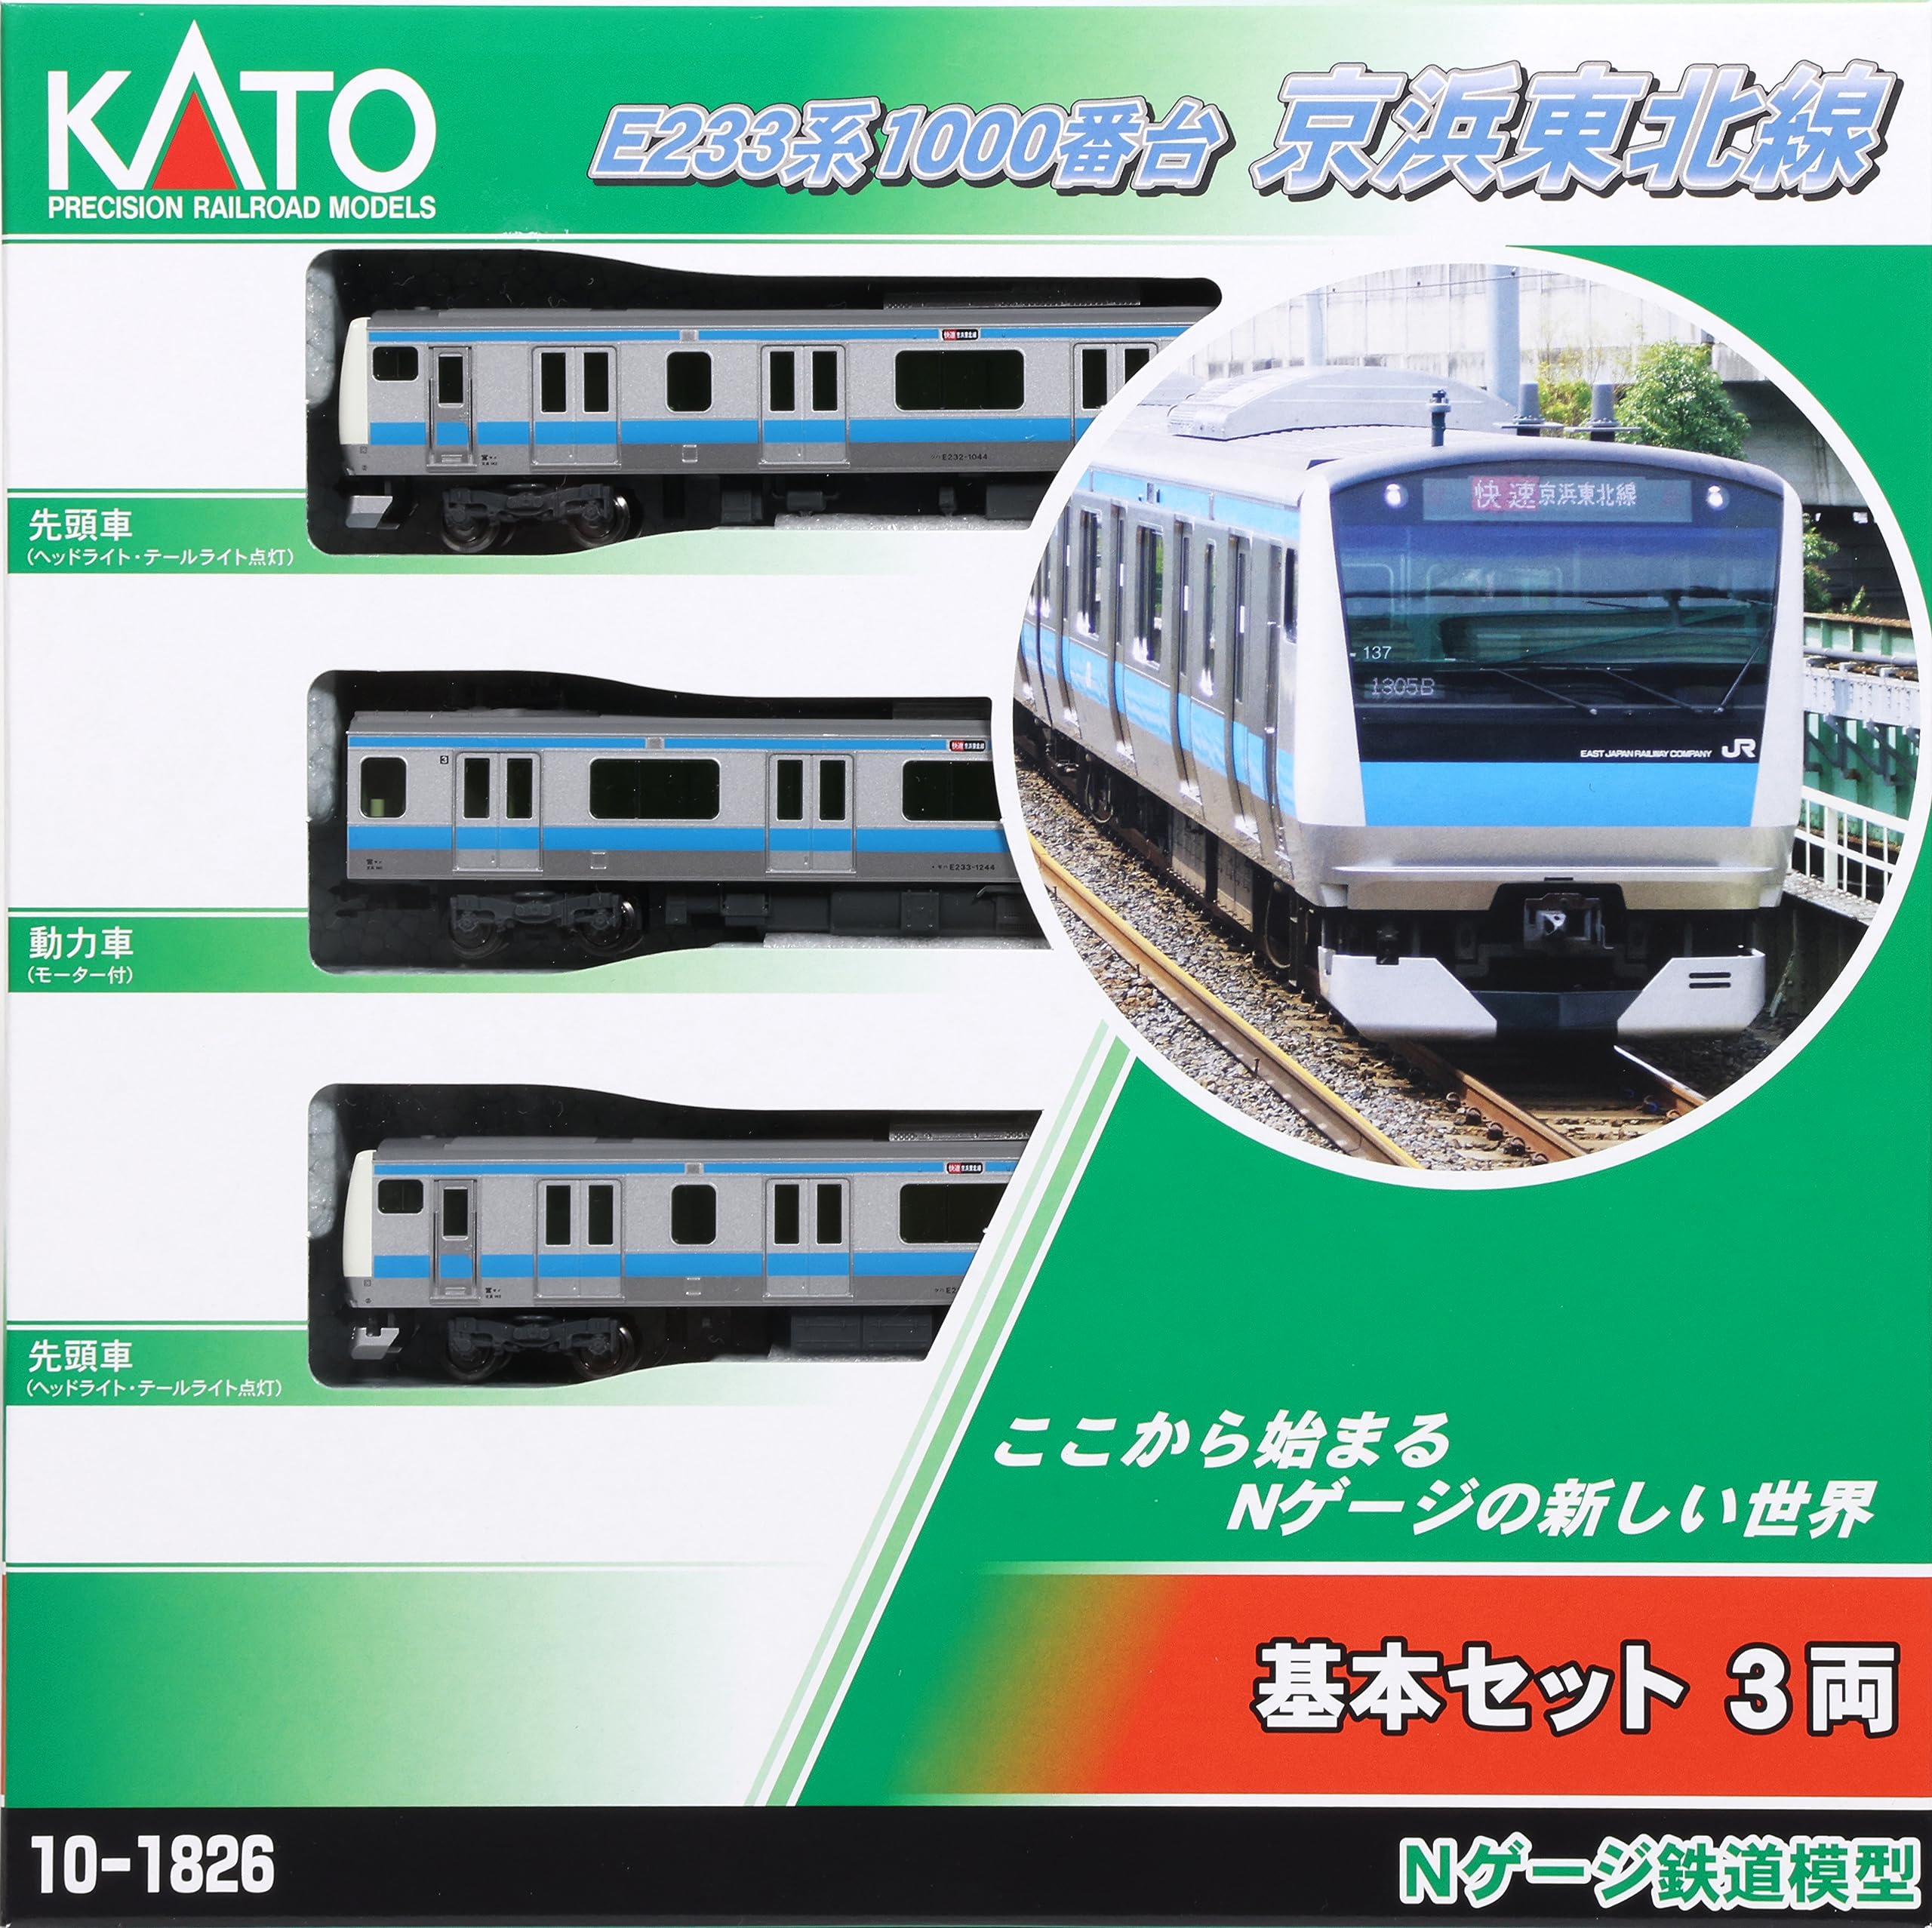 Kato N Gauge E233 Series 3 Cars Set 10-1826 Model Railway Train